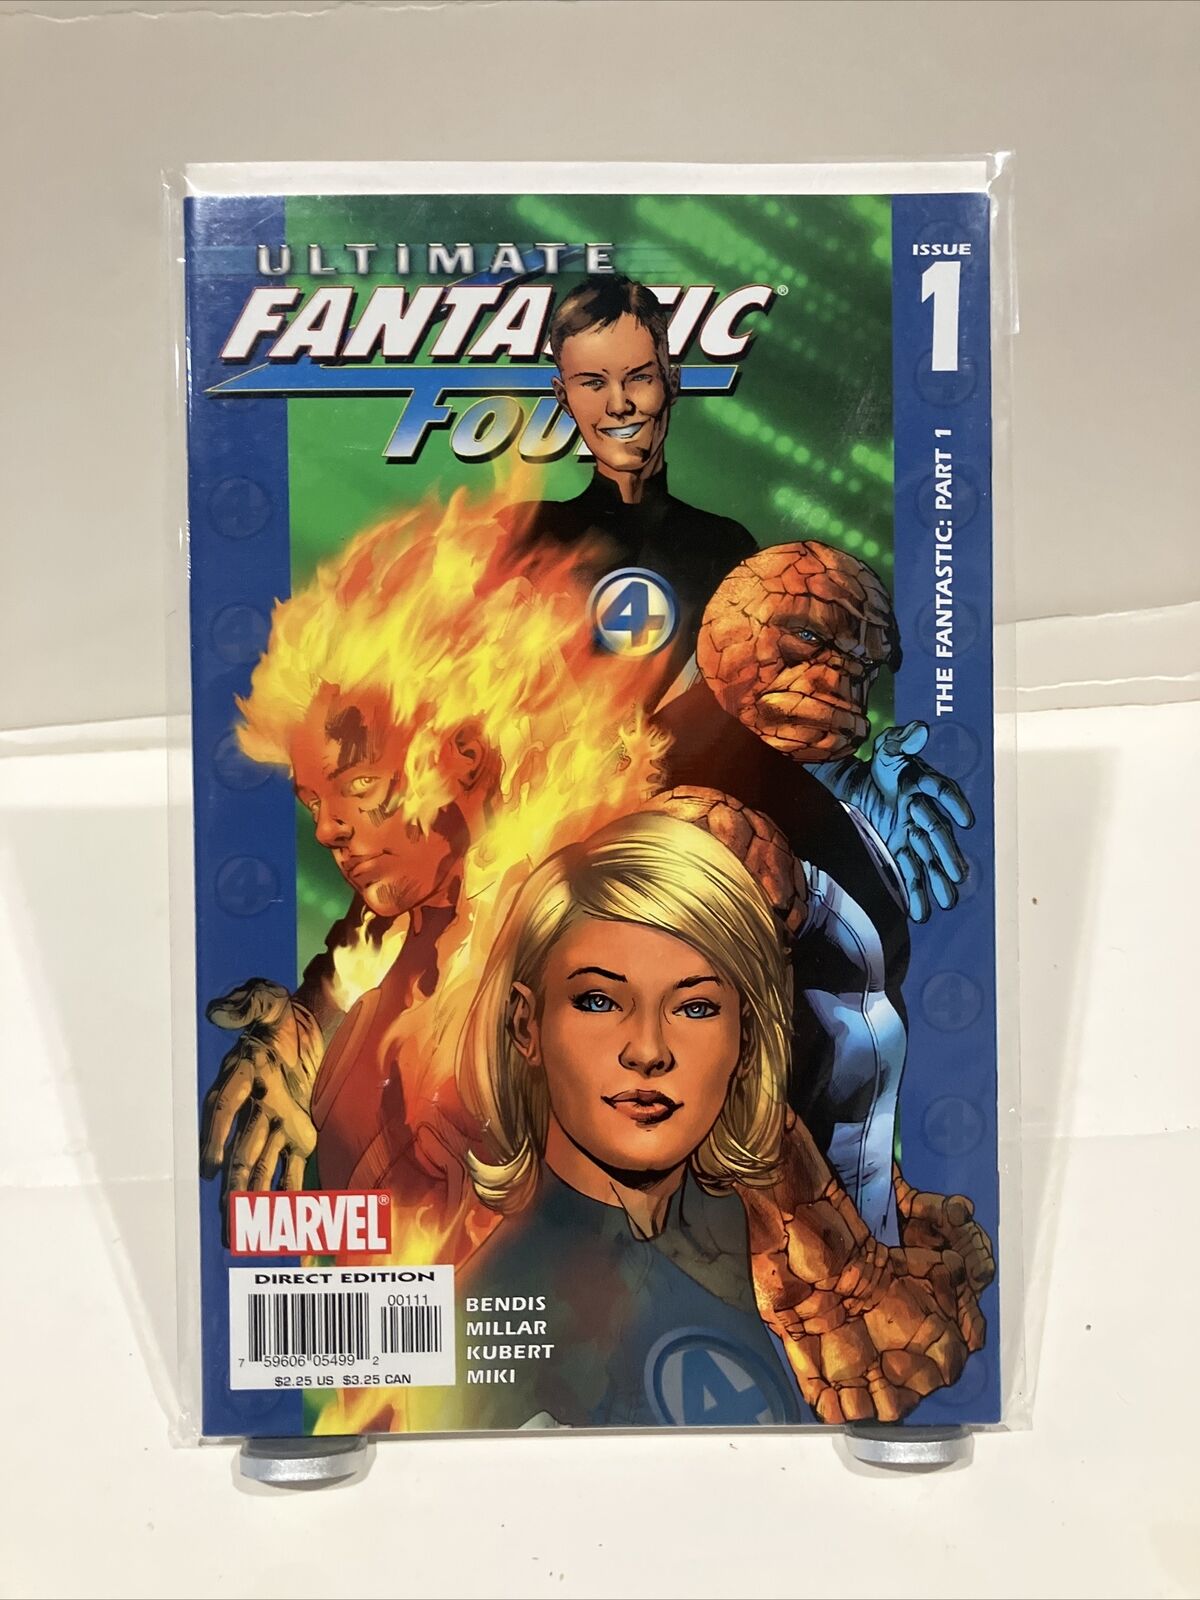 Ultimate Fantastic Four #1 (Marvel, September 2004)